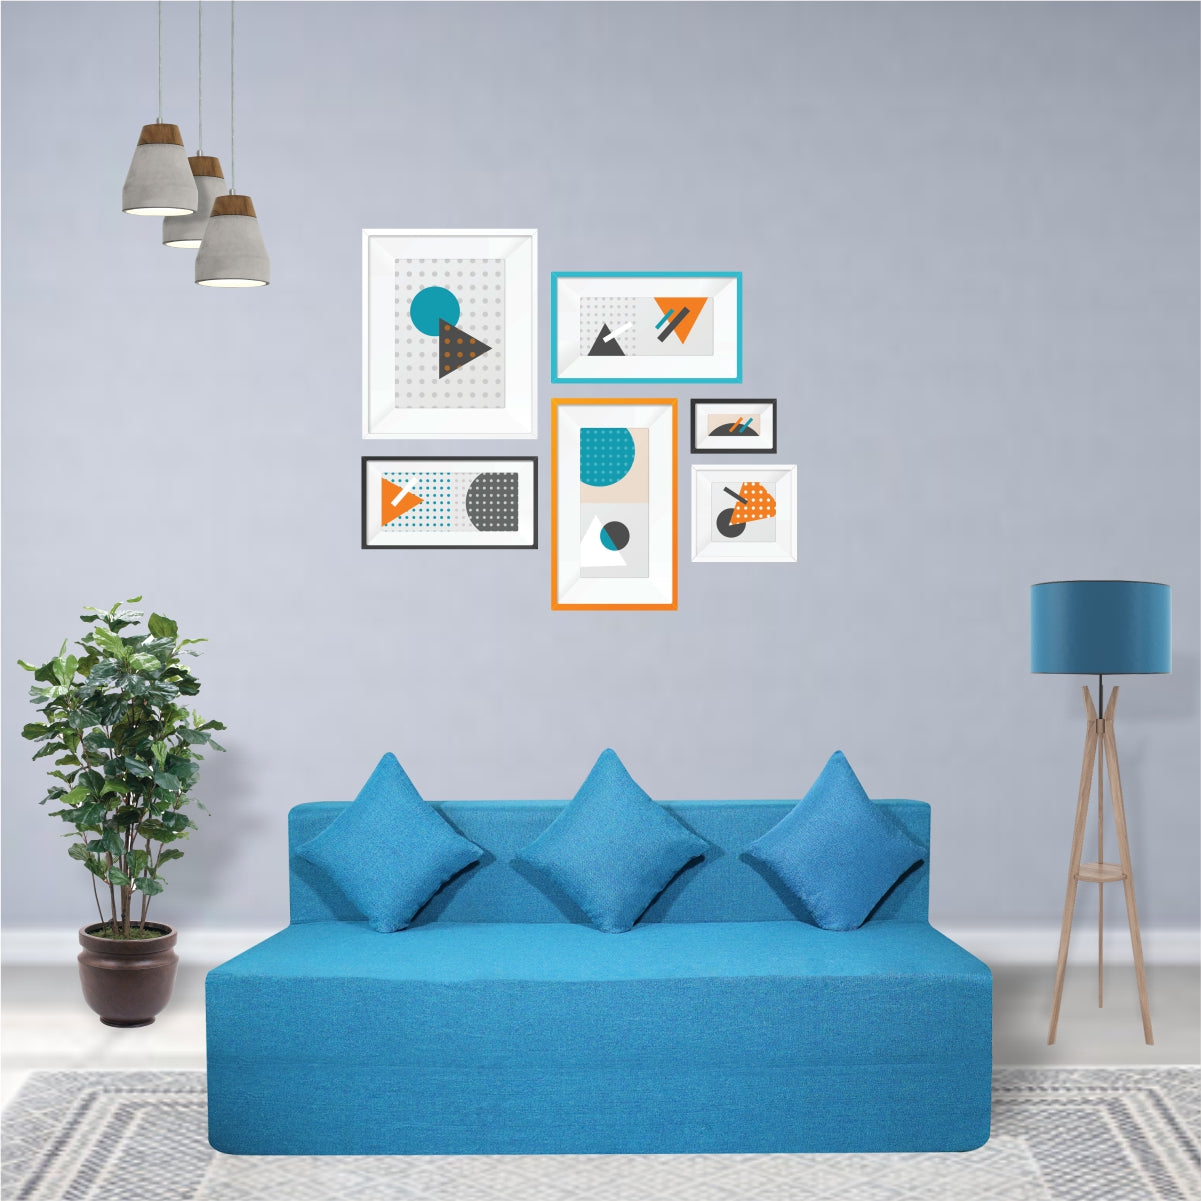 Cover of Blue Jute Fabric 6'X6' Rejoice Sofa cum Bed